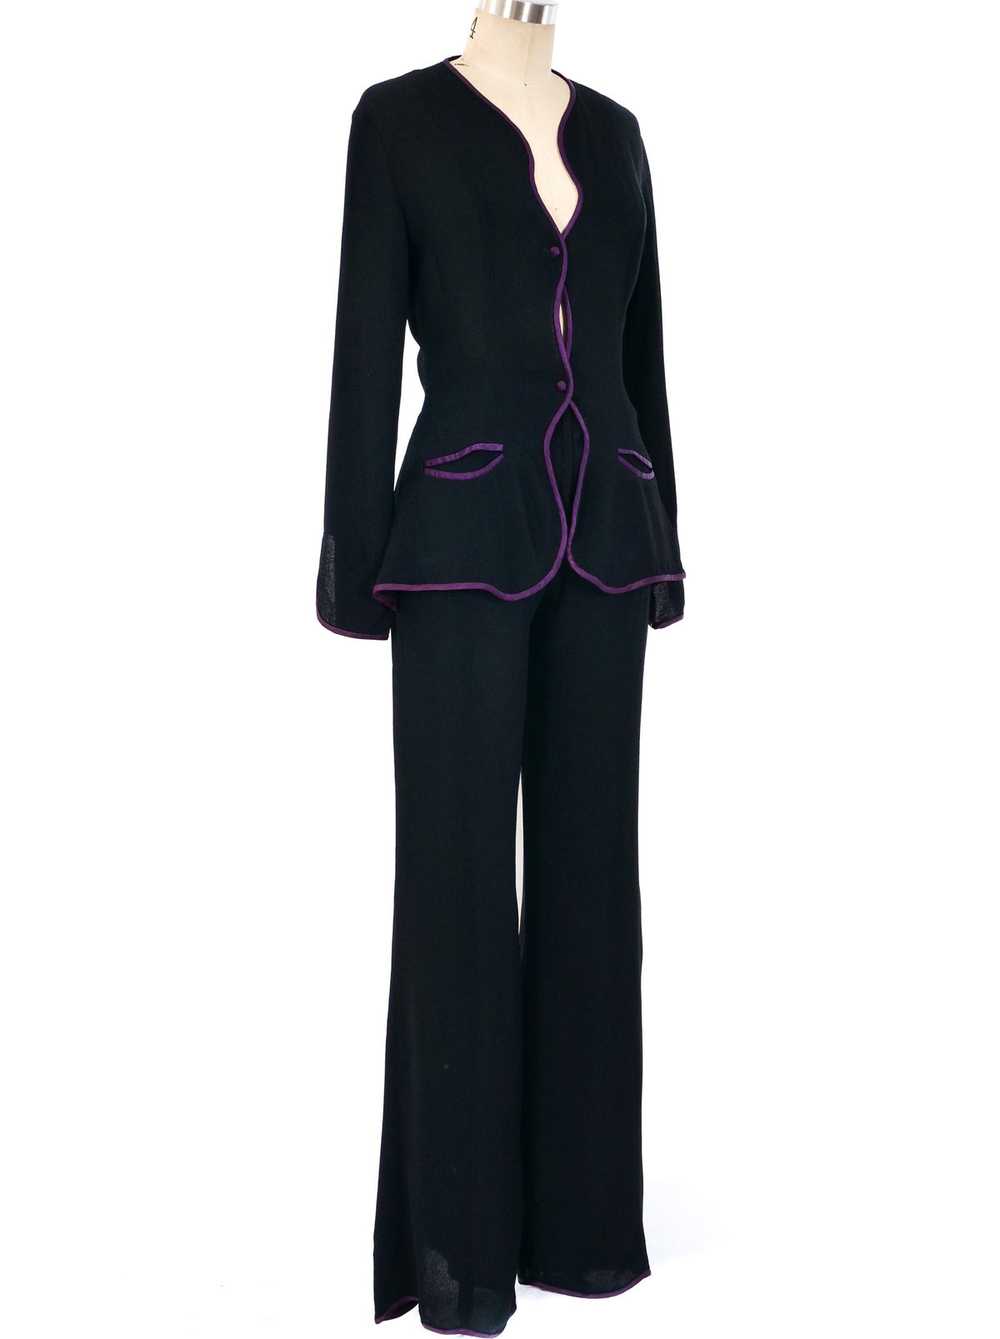 Ossie Clark Black Crepe Judy Pant Suit - image 3